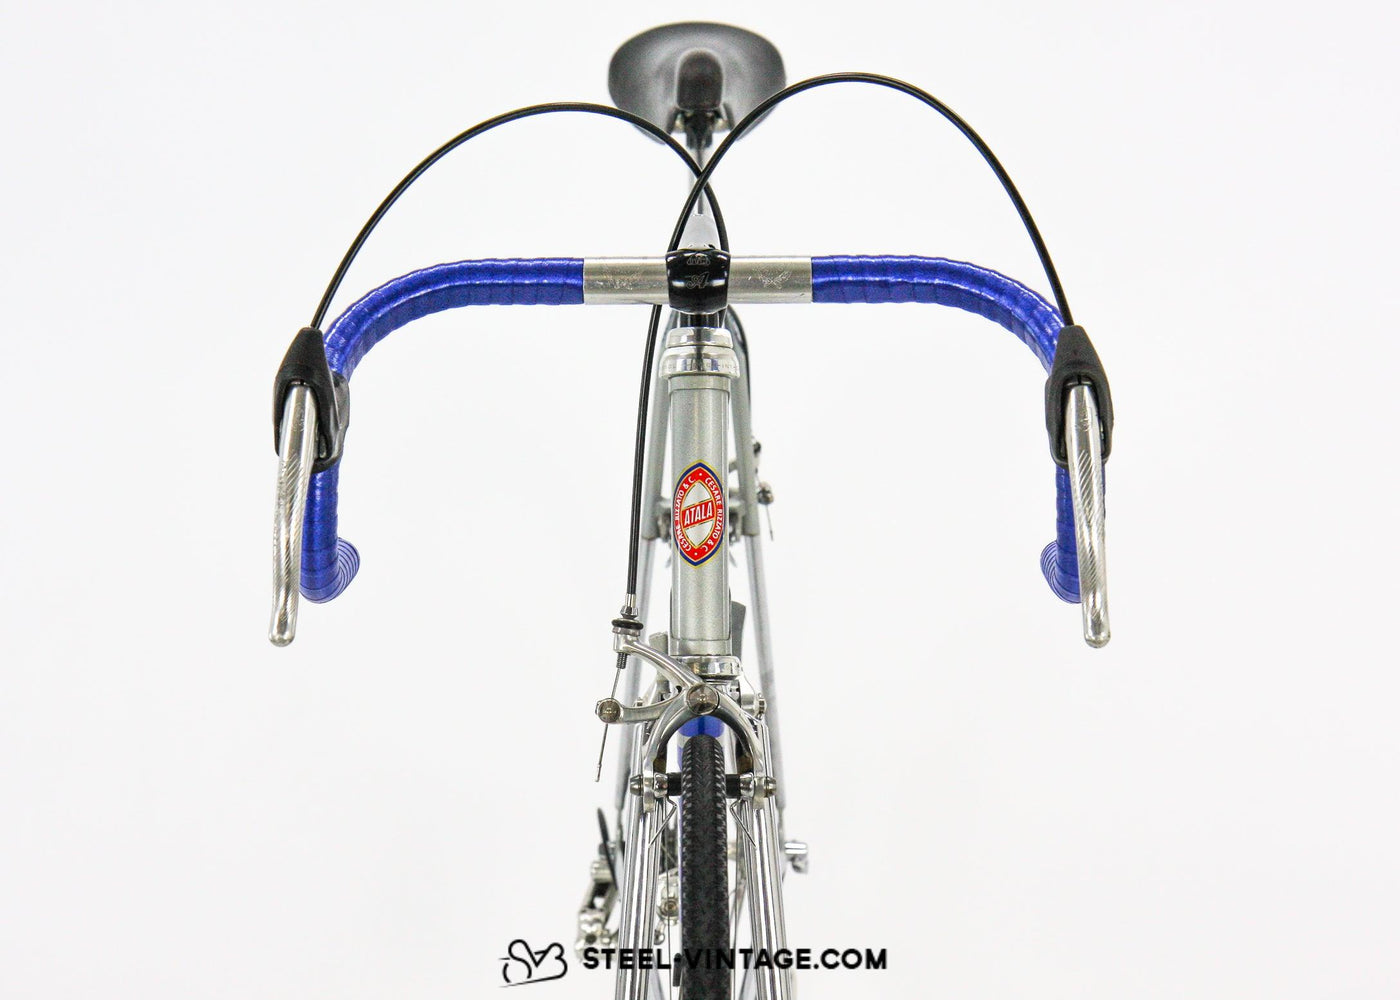 Atala Professionisti Classic Road Bike 1980s - Steel Vintage Bikes